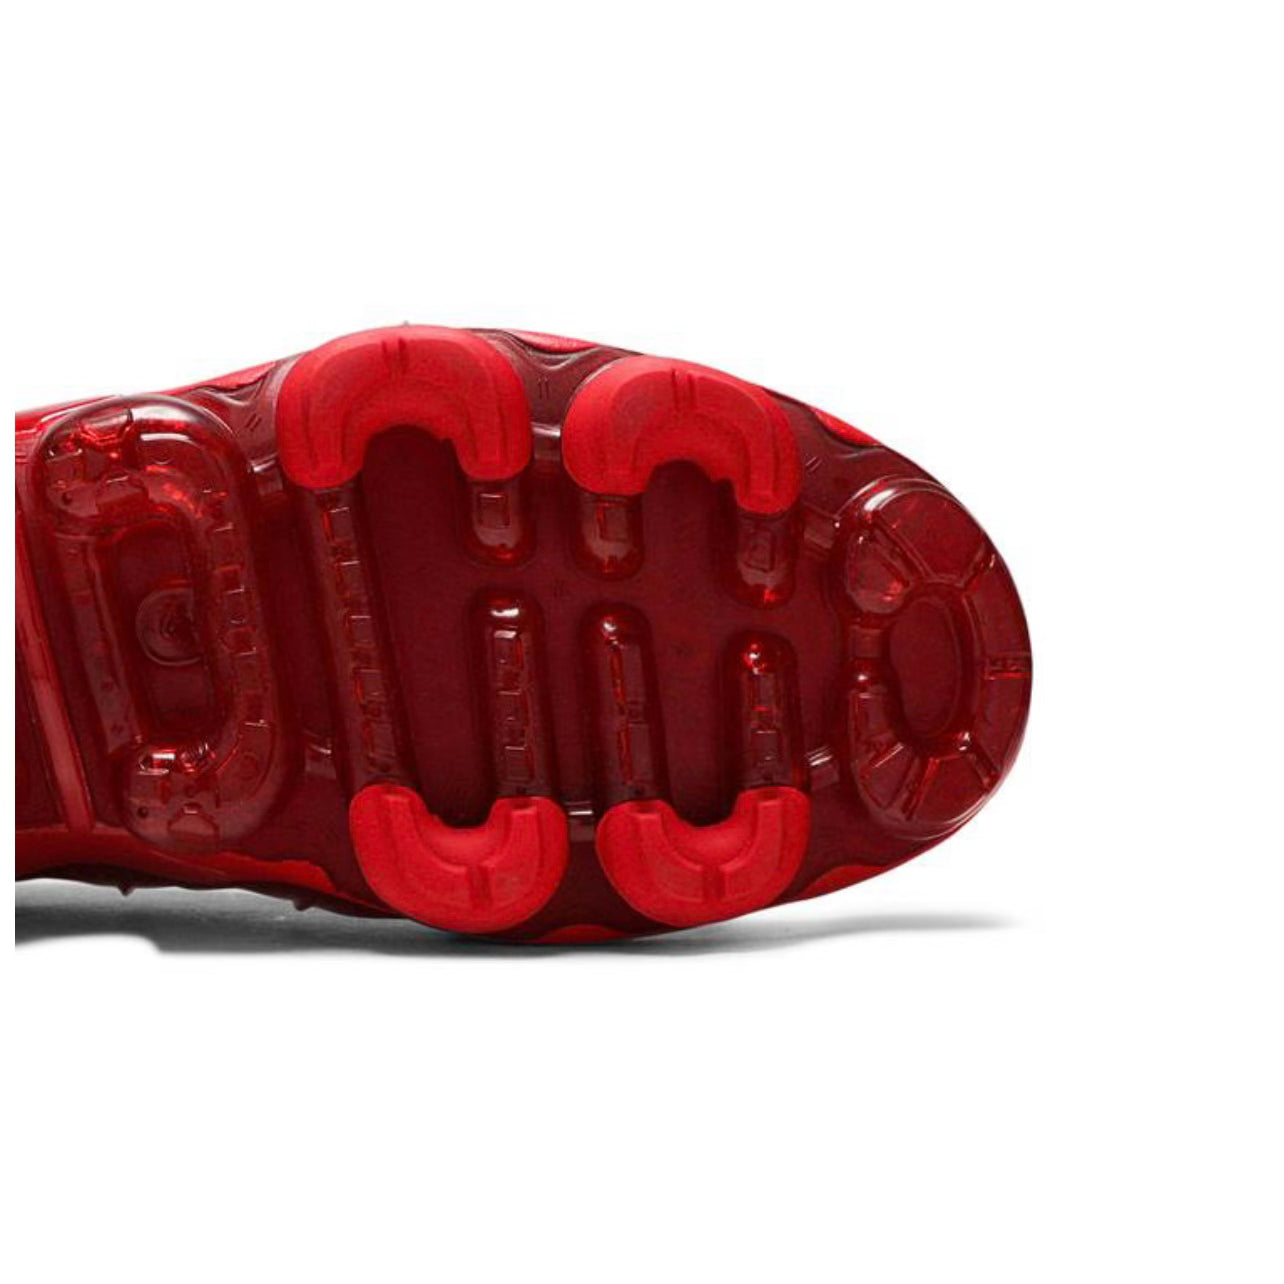 Nike Air Vapormax Plus "Triple Red"